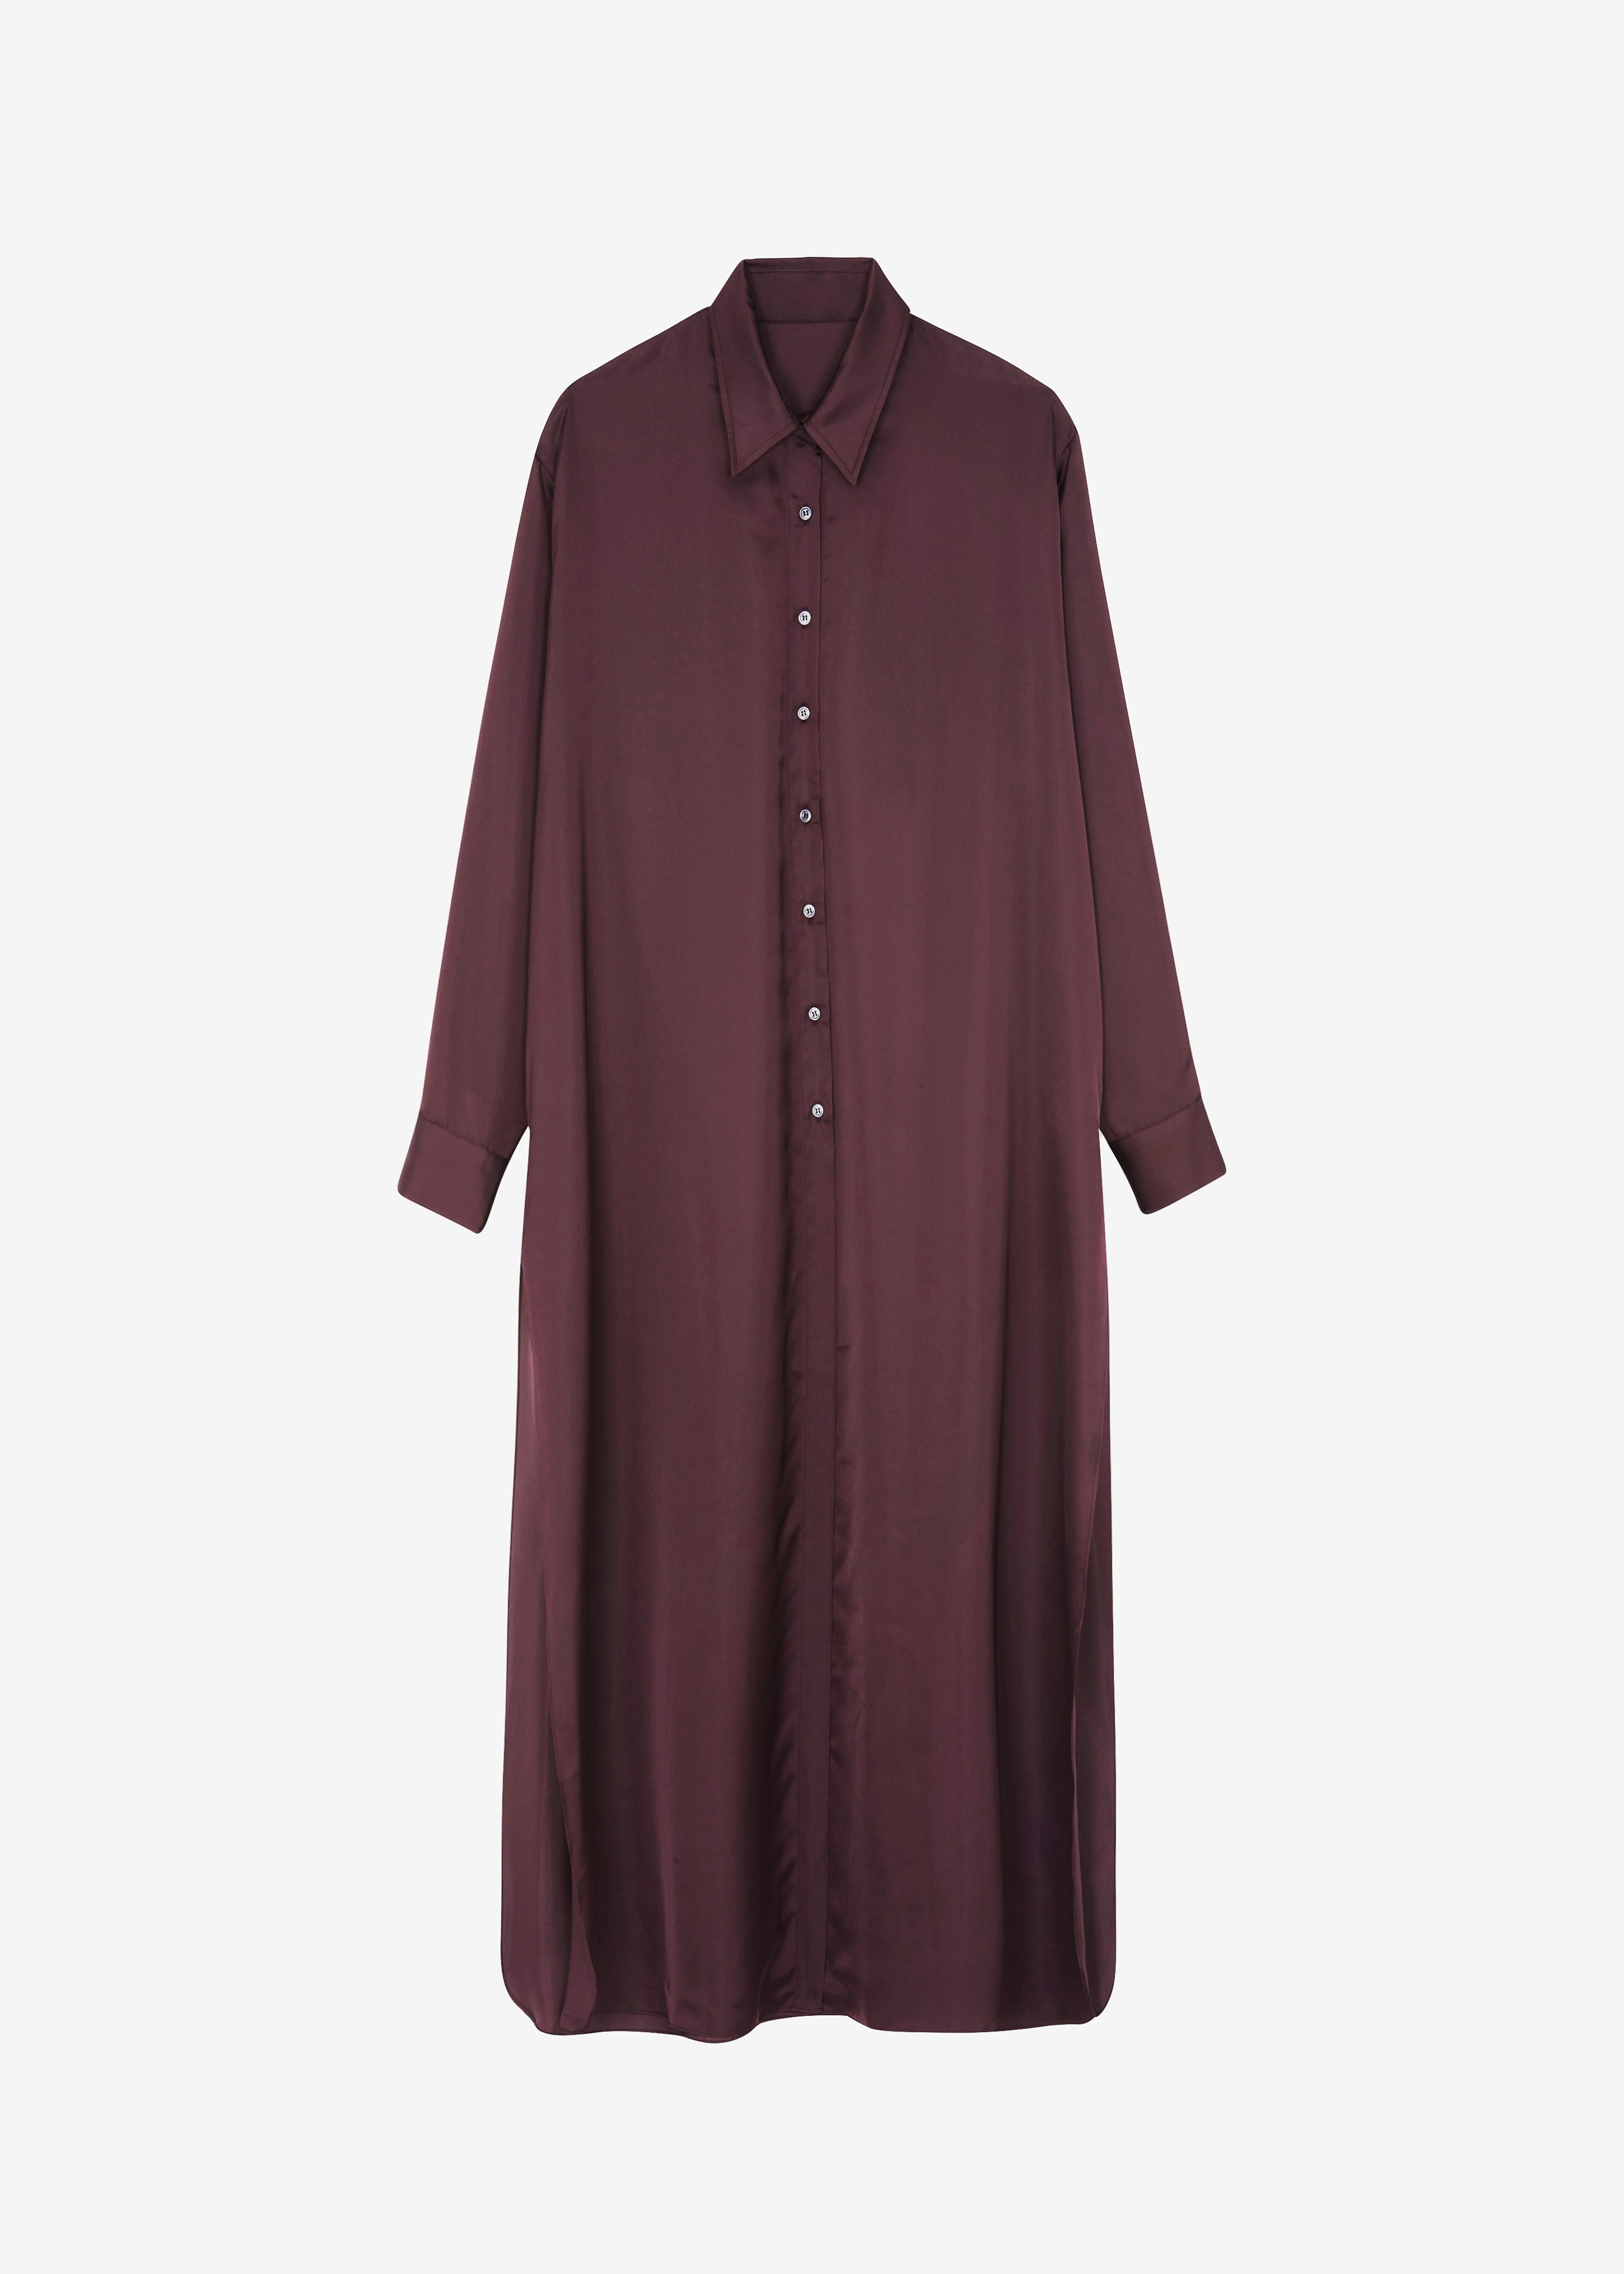 Avery Satin Shirt Dress - Burgundy - 10